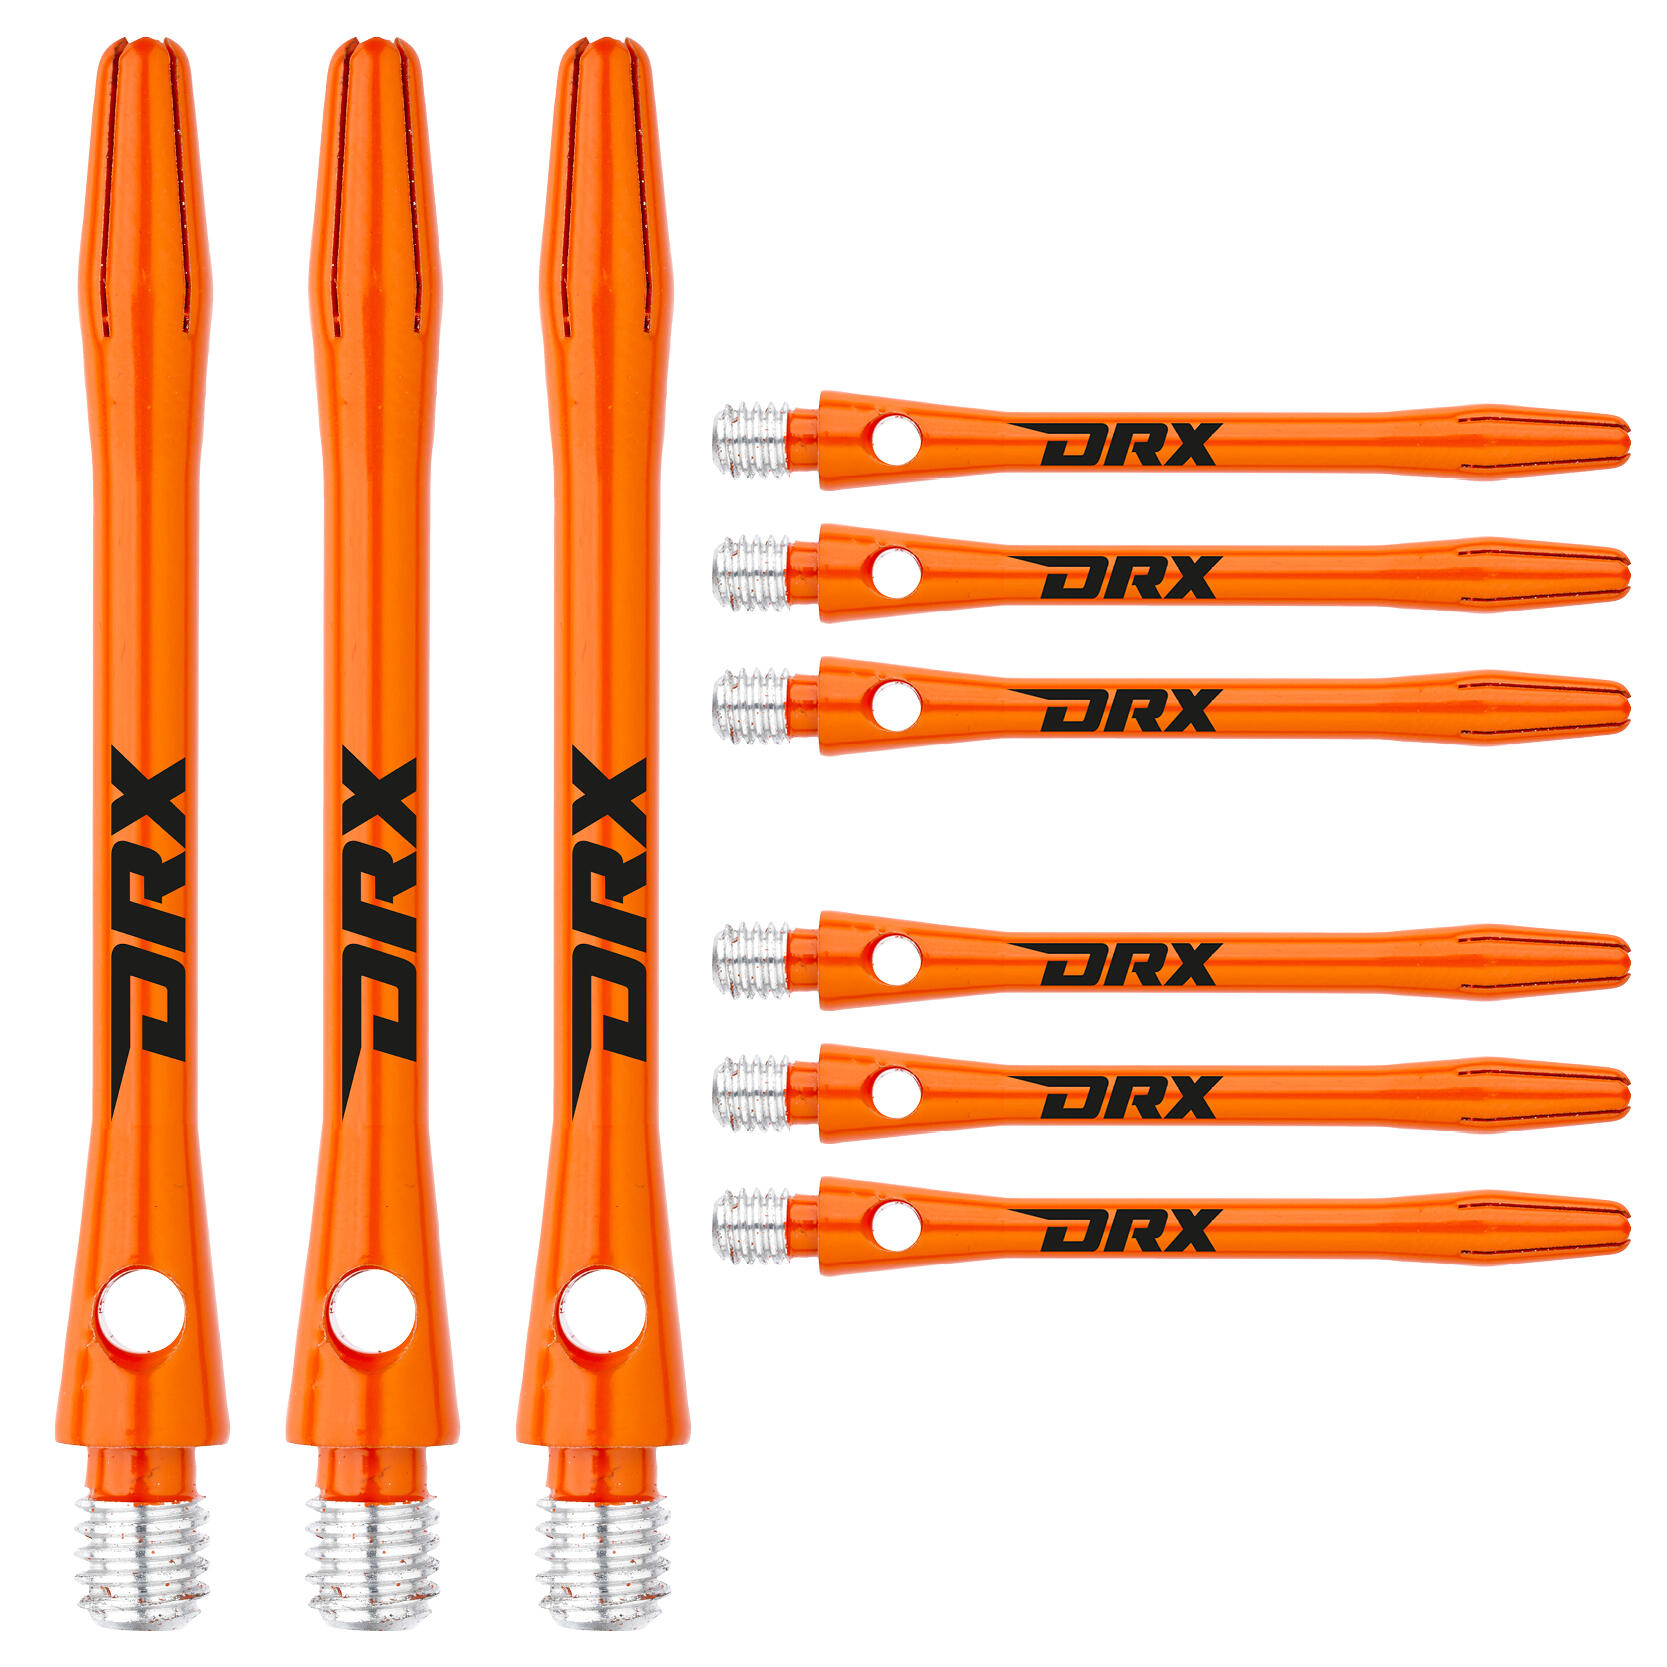 Red Dragon DRX Coated Aluminium Medium Orange Dart Shafts - 2 sets per pack 1/4